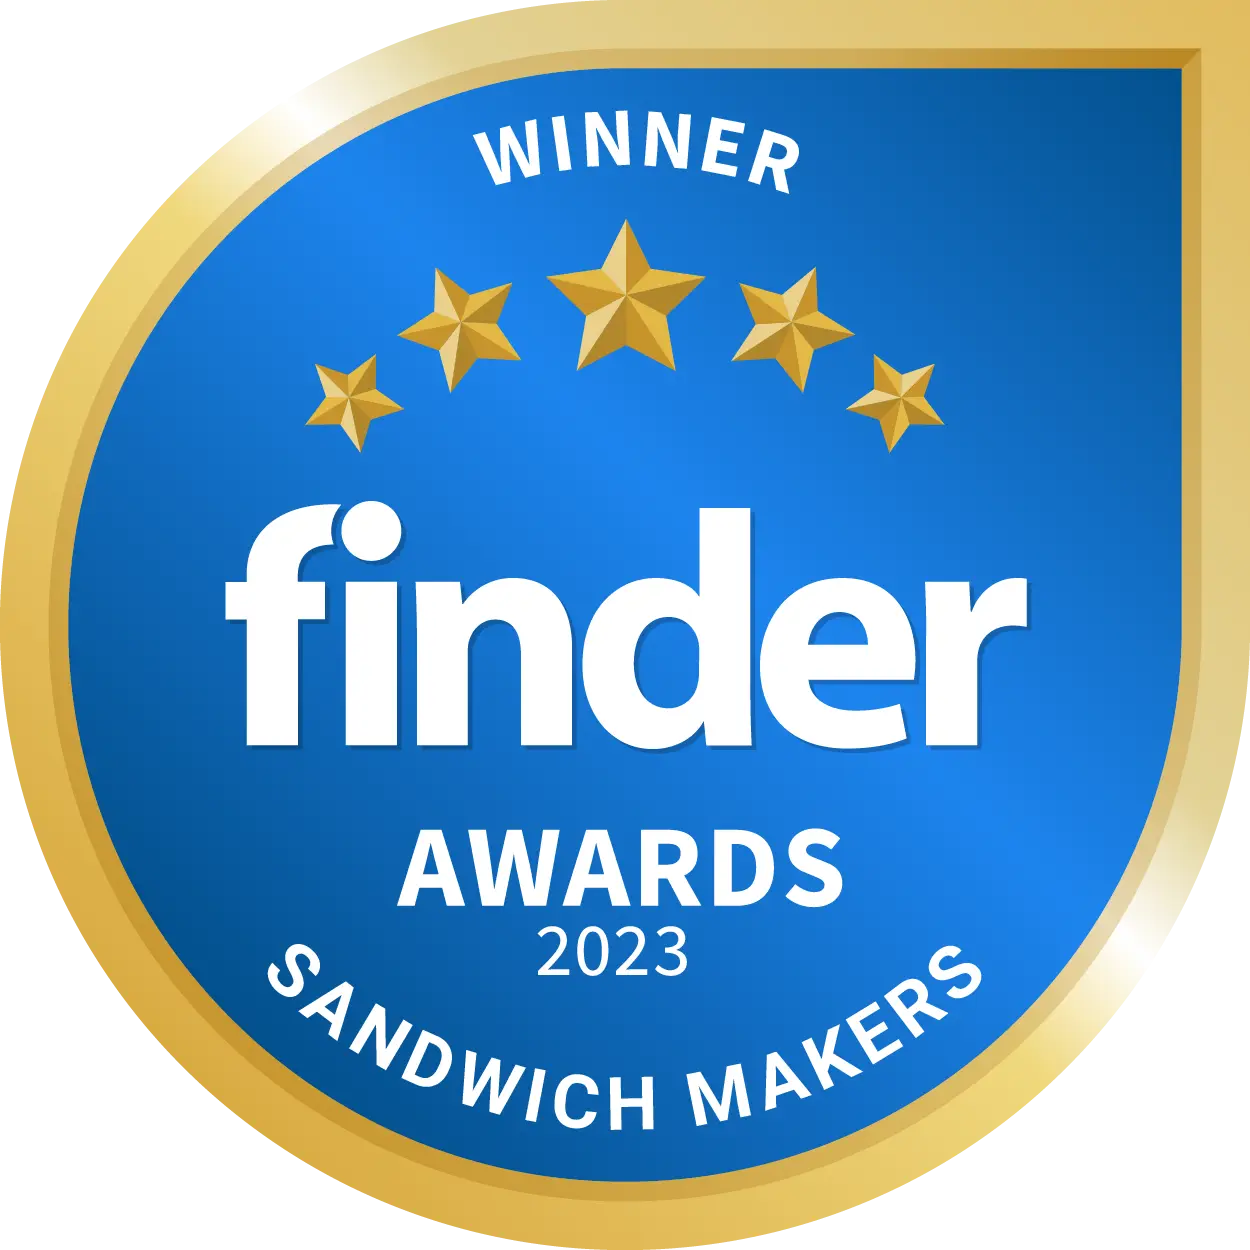 Best Sandwich Maker Brand